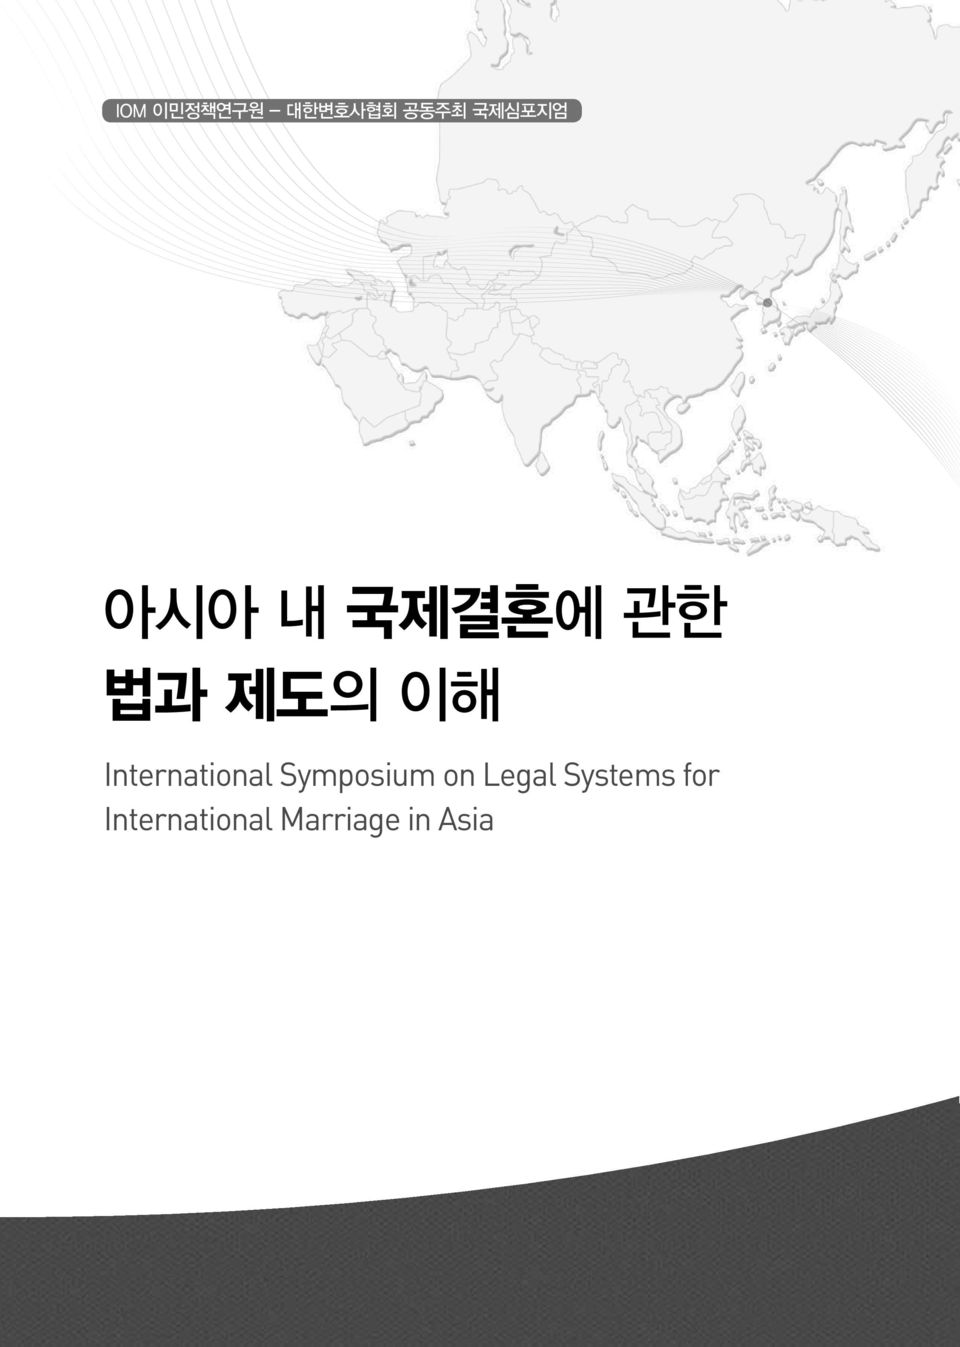 International Symposium on Legal